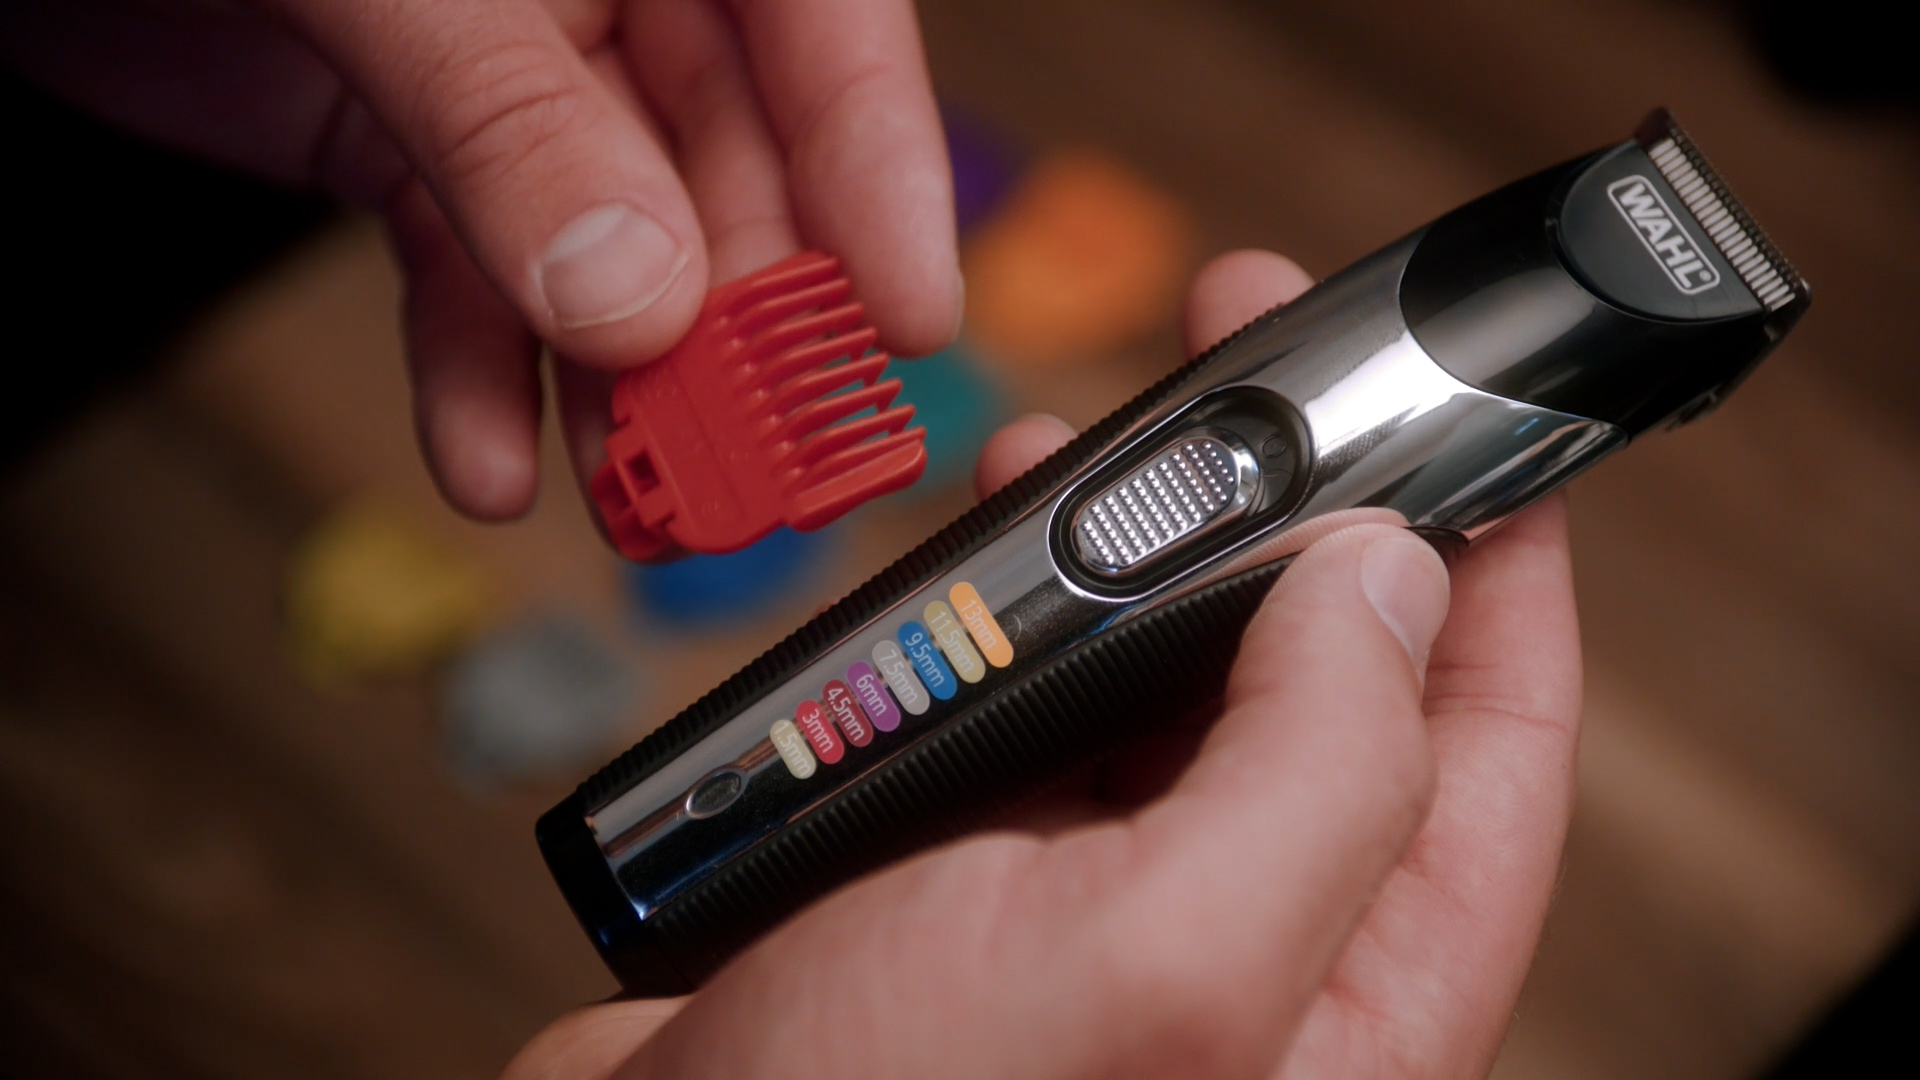 wireless razer with hair trimmer lengths